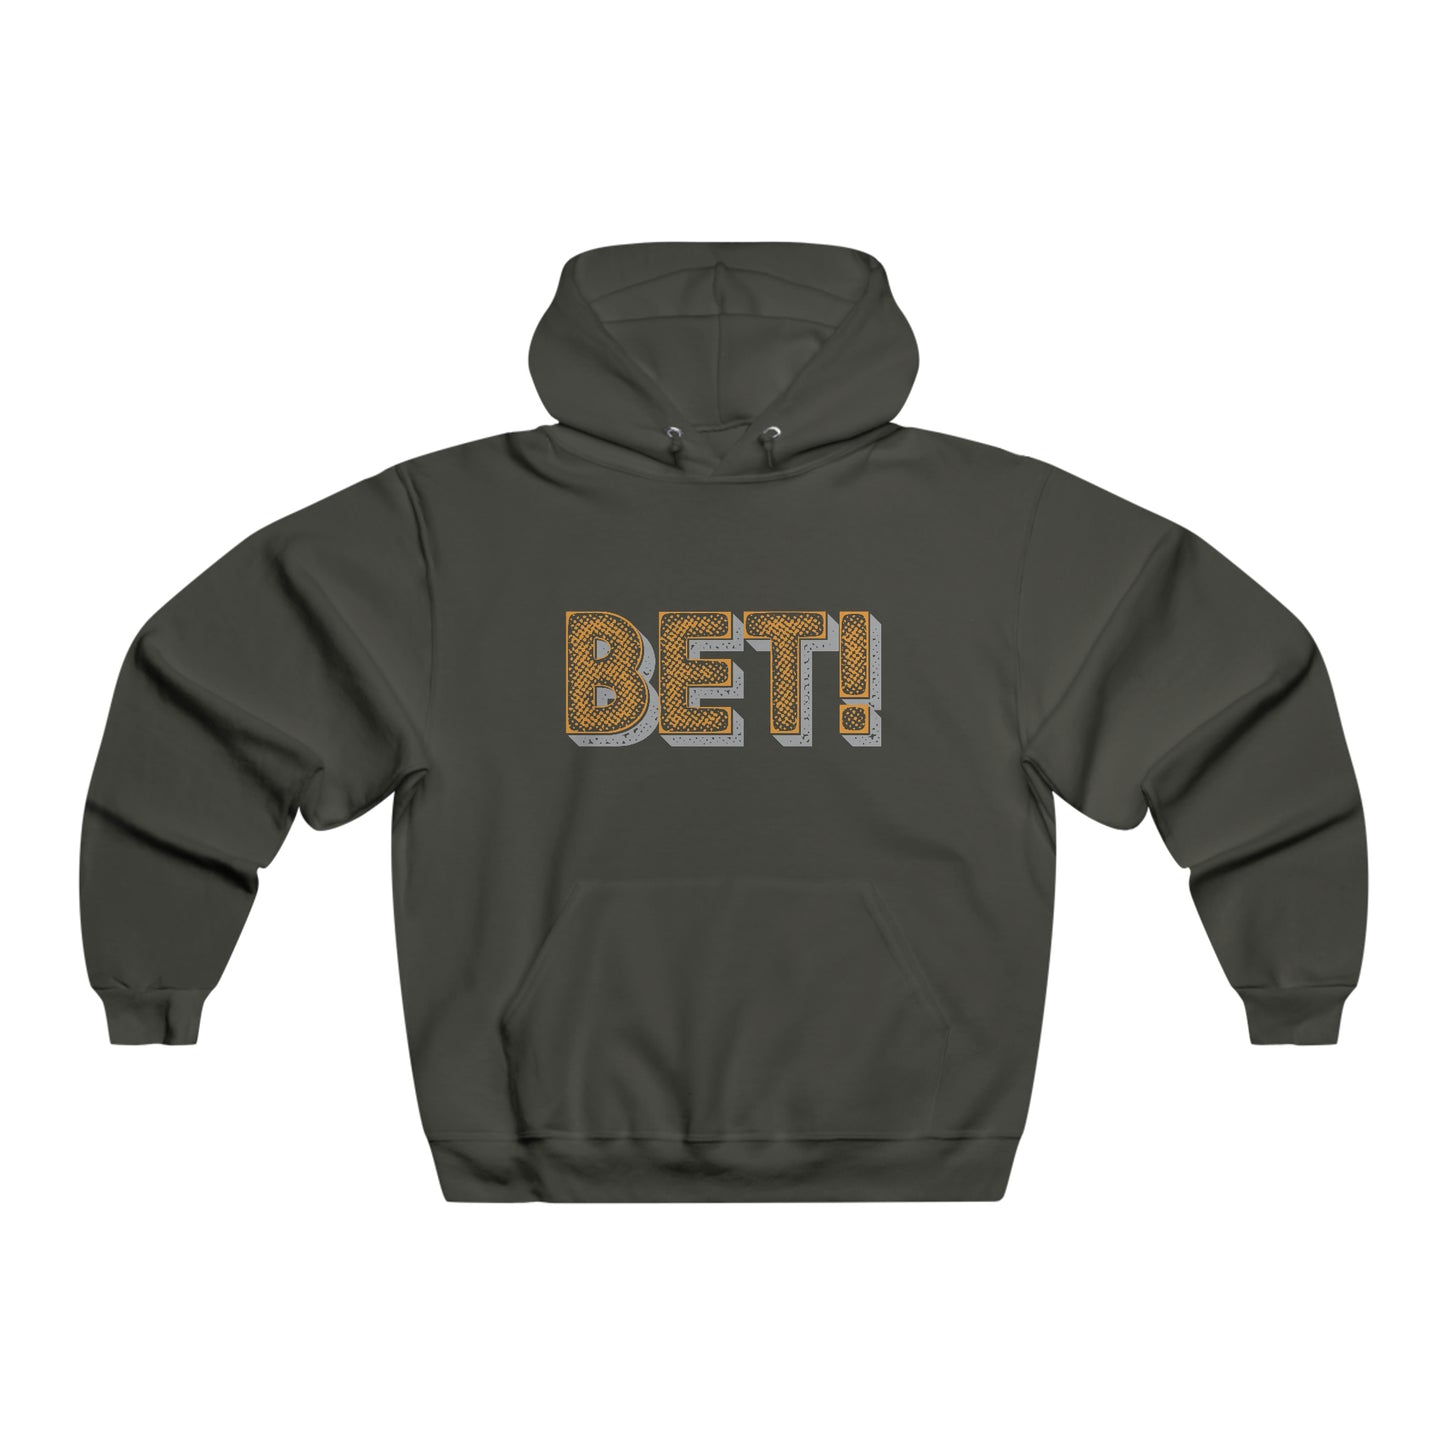 BET! - Hooded Sweatshirt